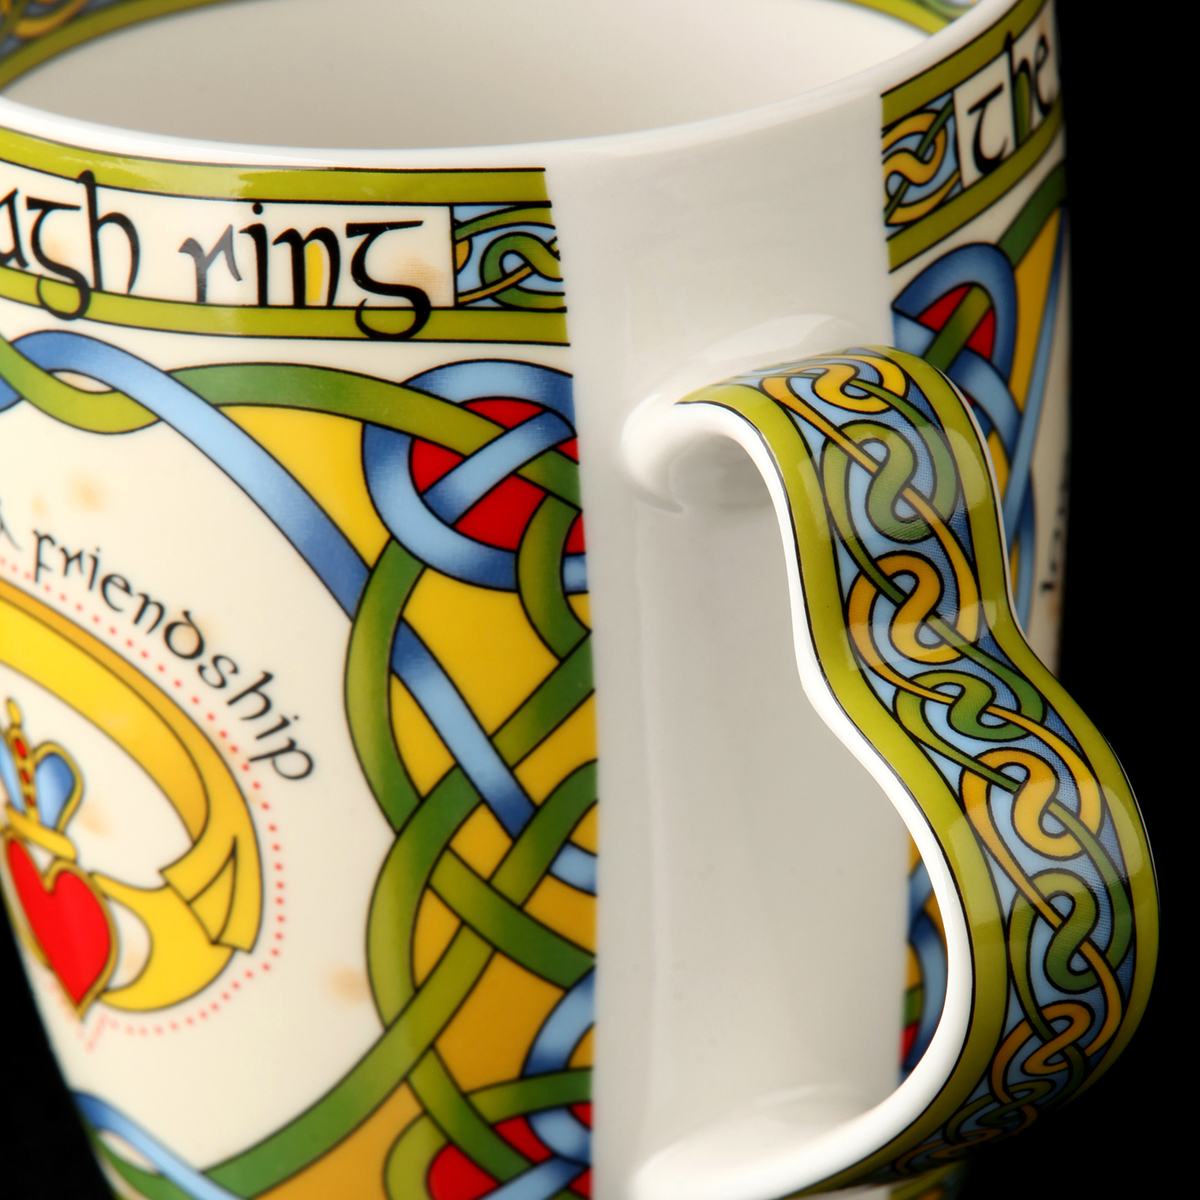 Claddagh Mug - Kaffeebecher aus Irland mit Claddagh Ring & keltischem Muster